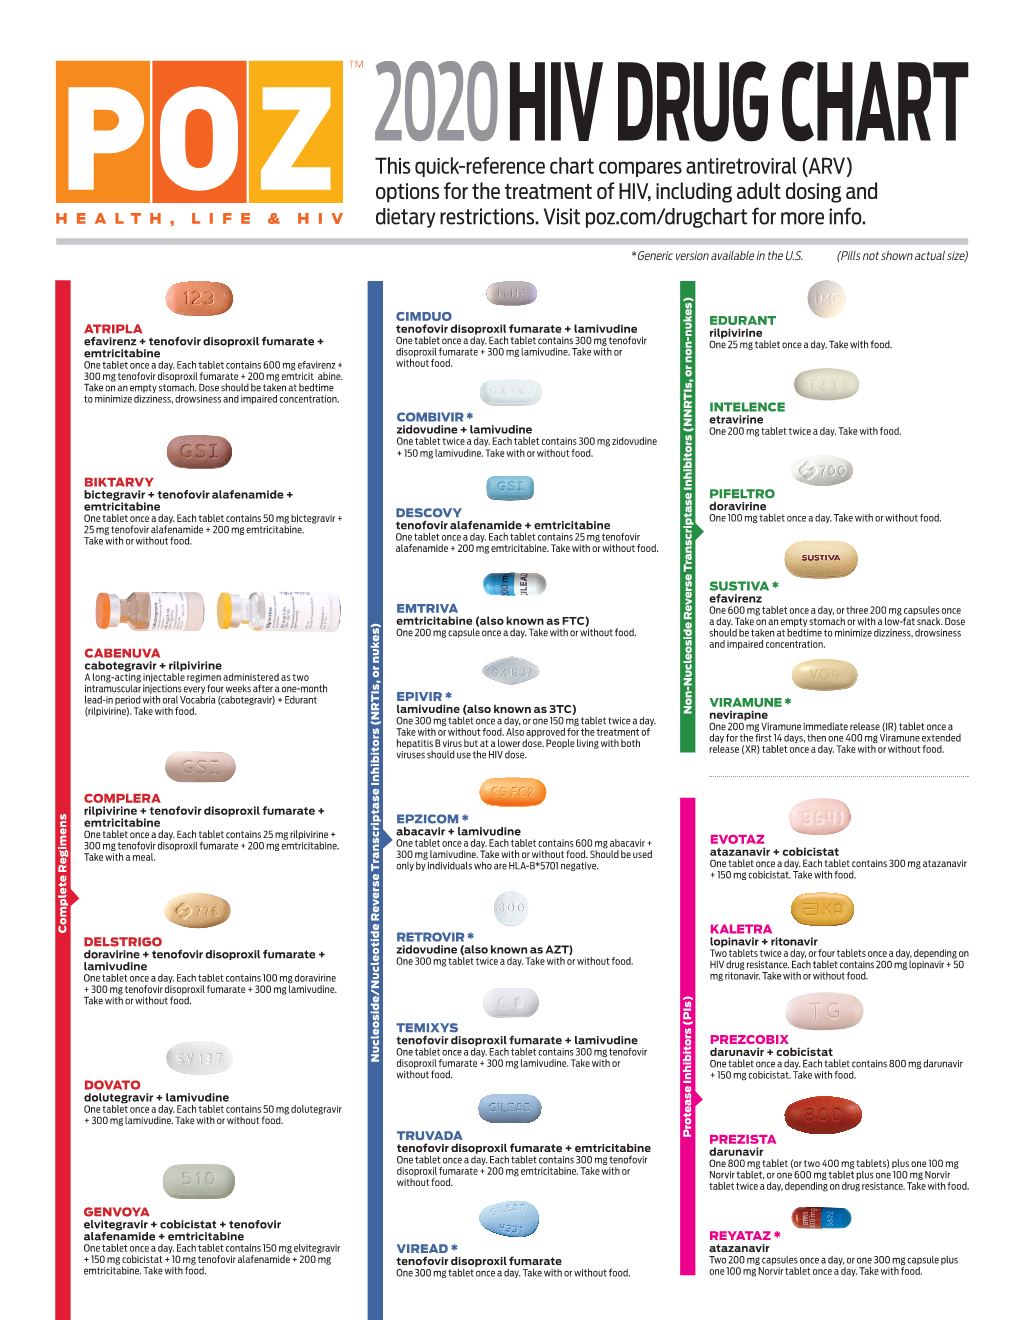 POZ 2020 HIV Drug Chart